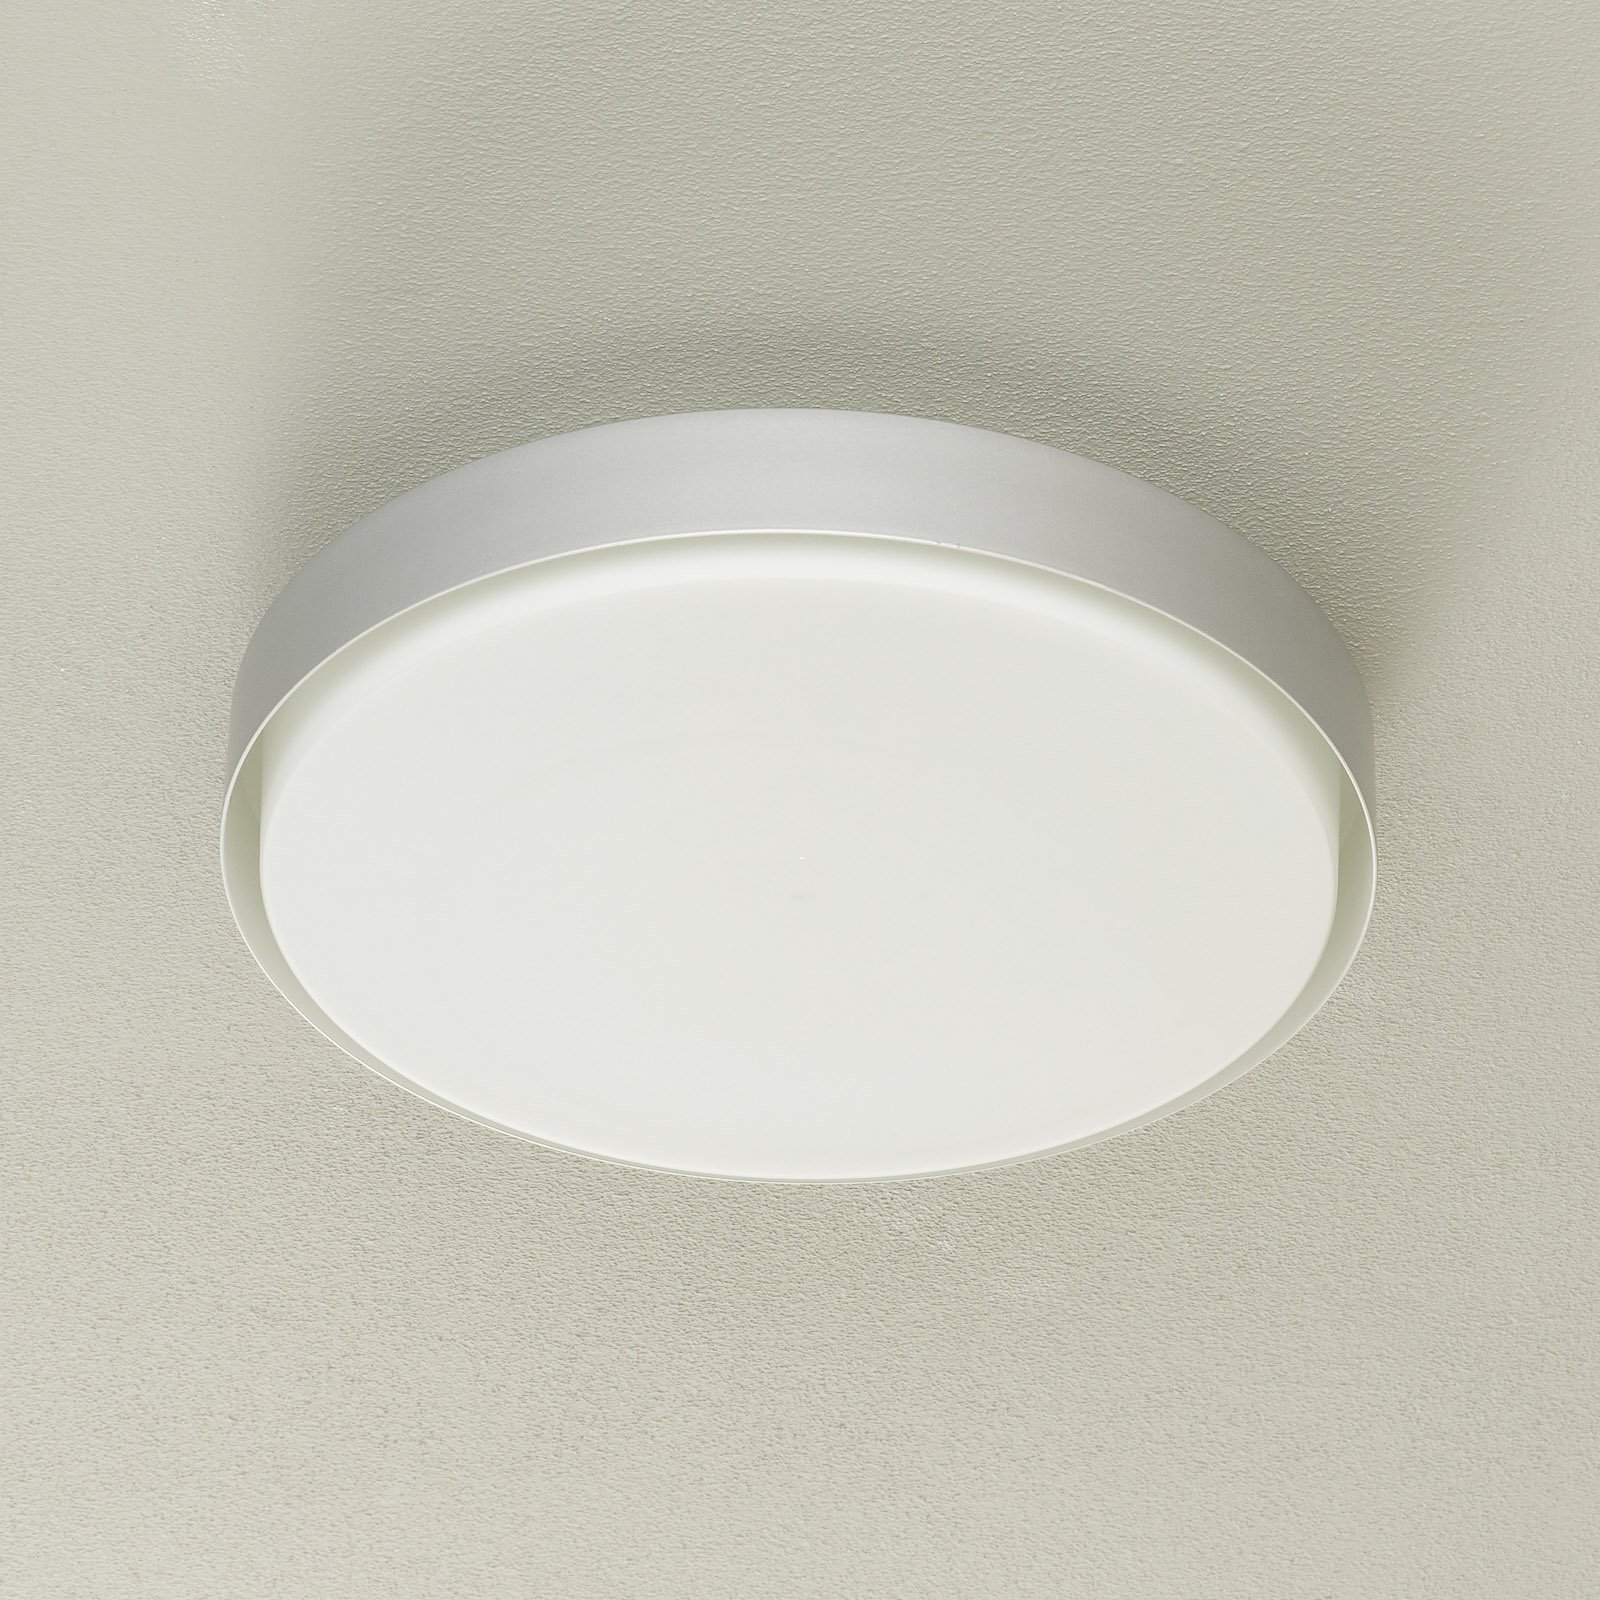 BEGA 34279 LED ceiling light aluminium Ø 42cm DALI